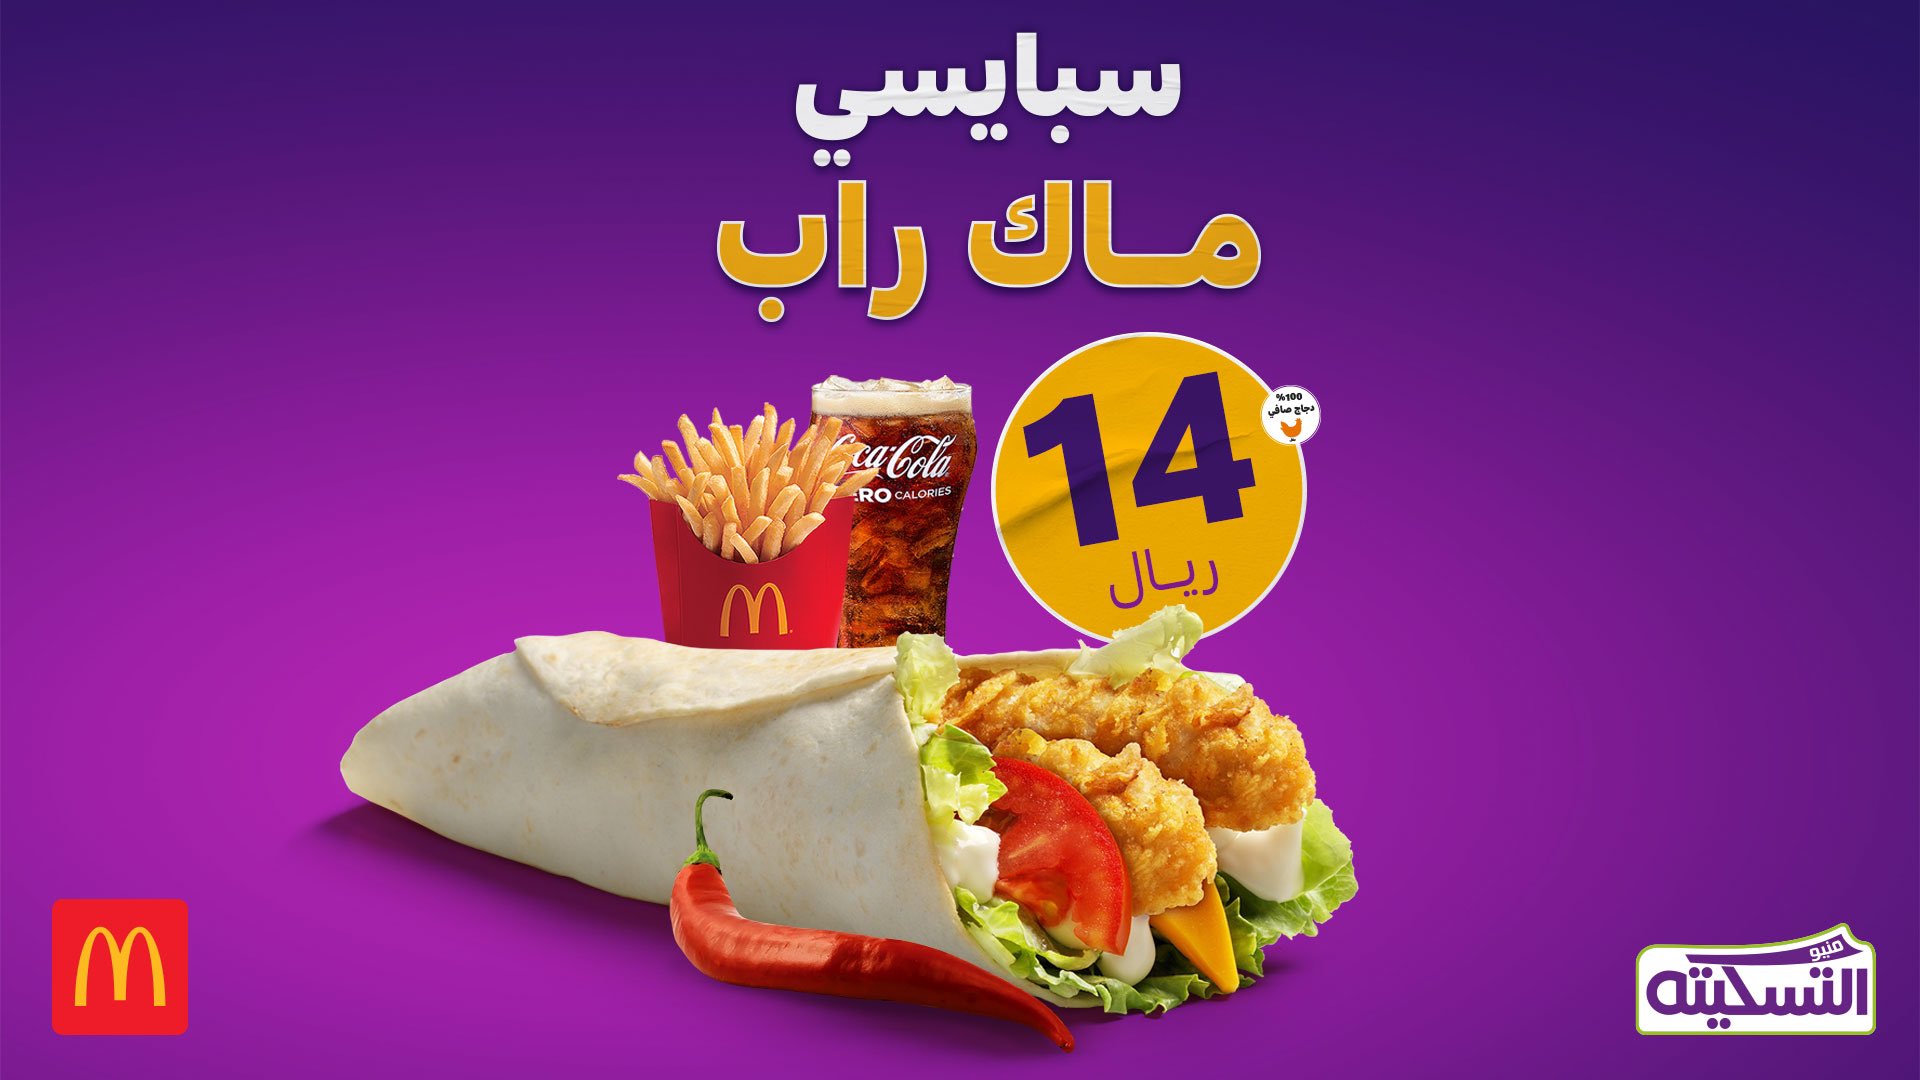 FStQH32WAAMg6M6 - عروض مطاعم ماكدونالدز السعودية الوسطى والشرقية والشمالية علي منيو التسكيتة